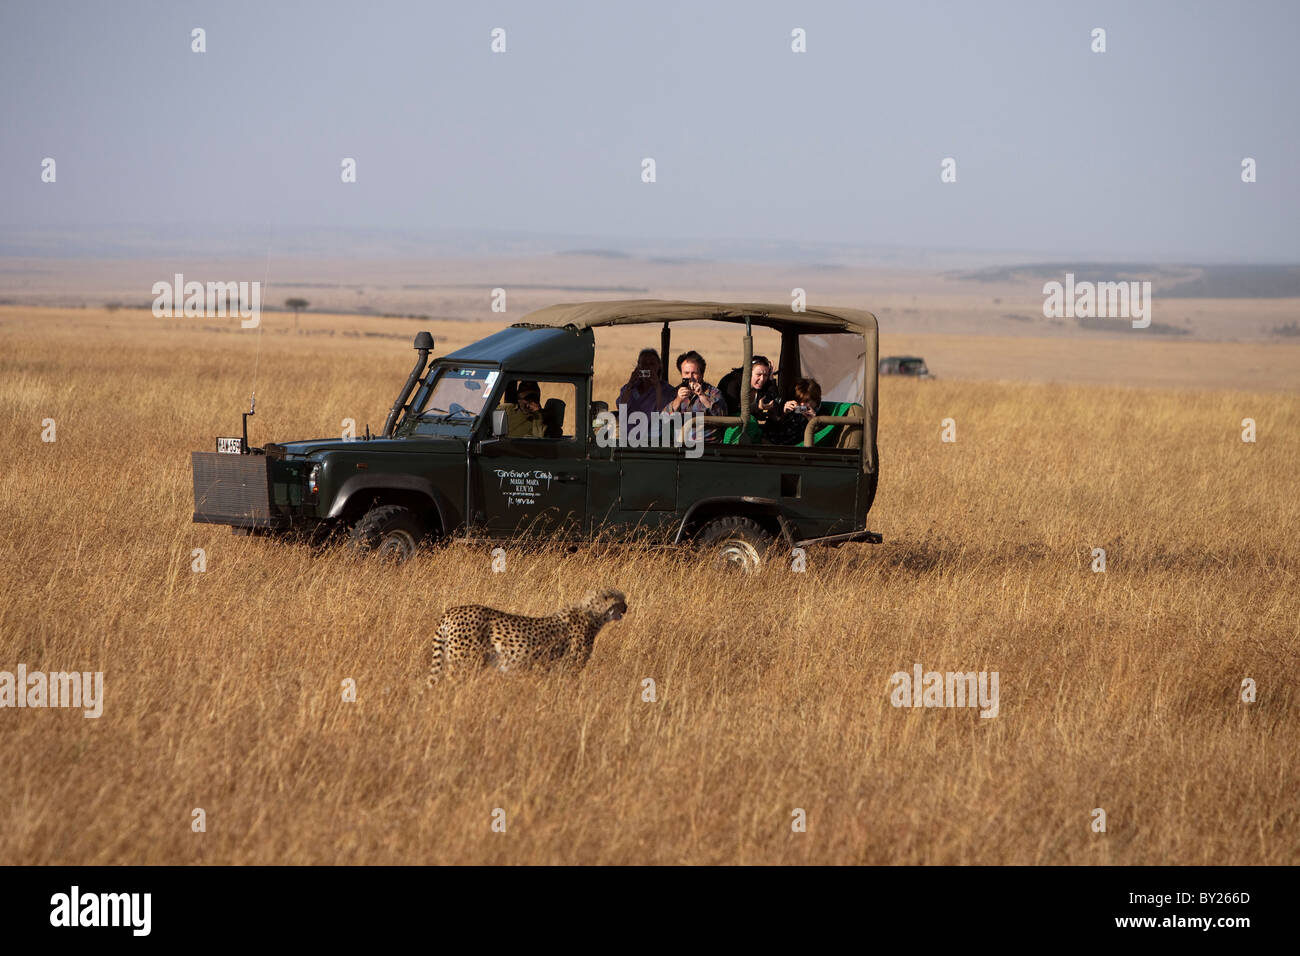 Kenya, Masai Mara.  Tourists on safari enjoying the sight of a cheetah out hunting on the grassy plains of the Masai Mara. Stock Photo